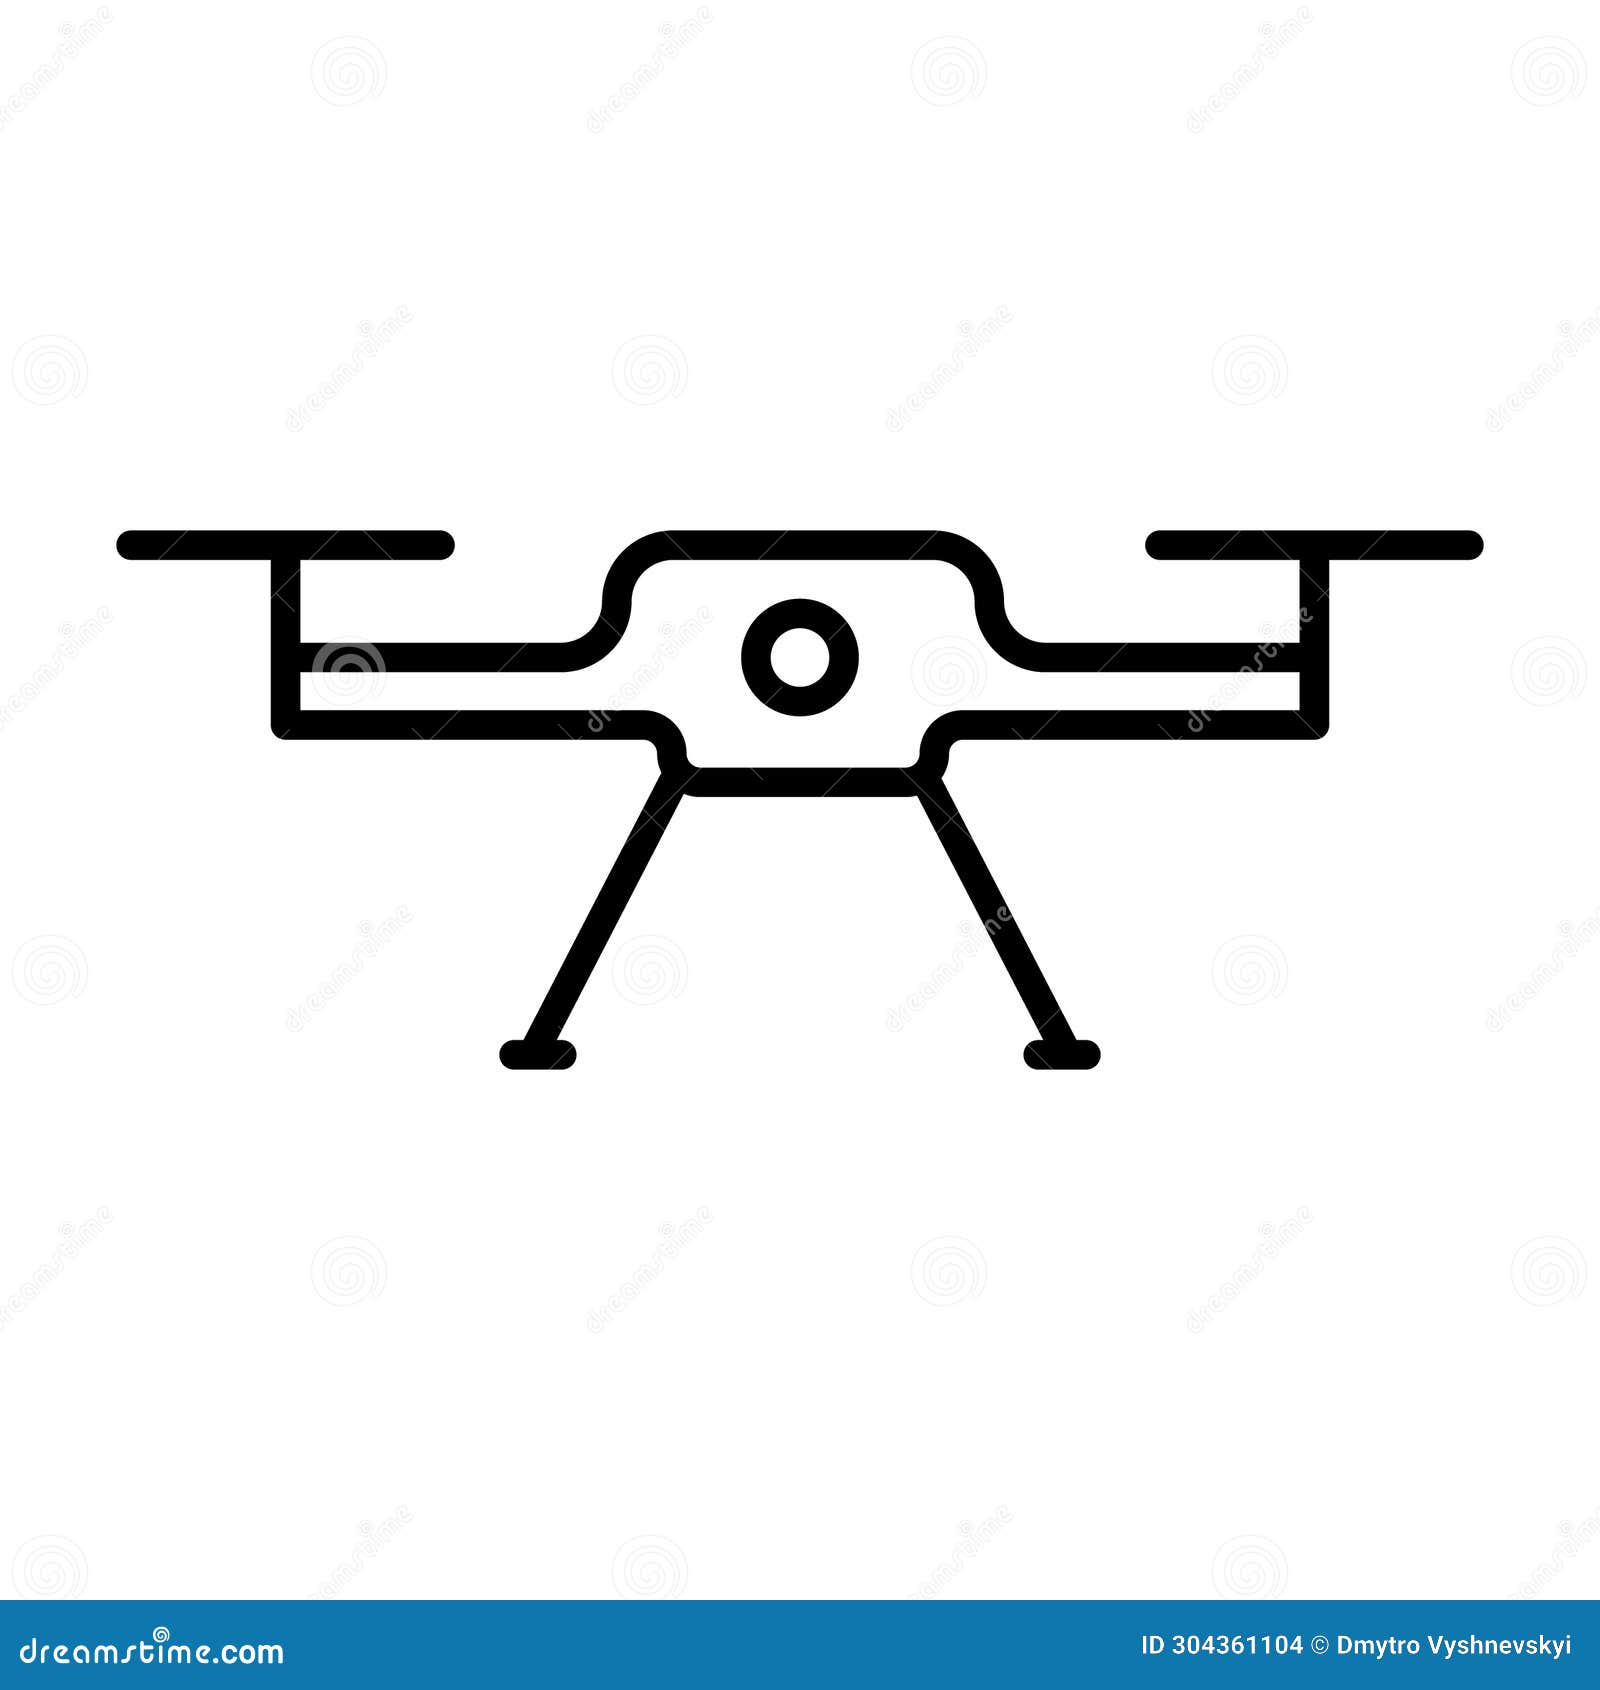 dron outline  icon